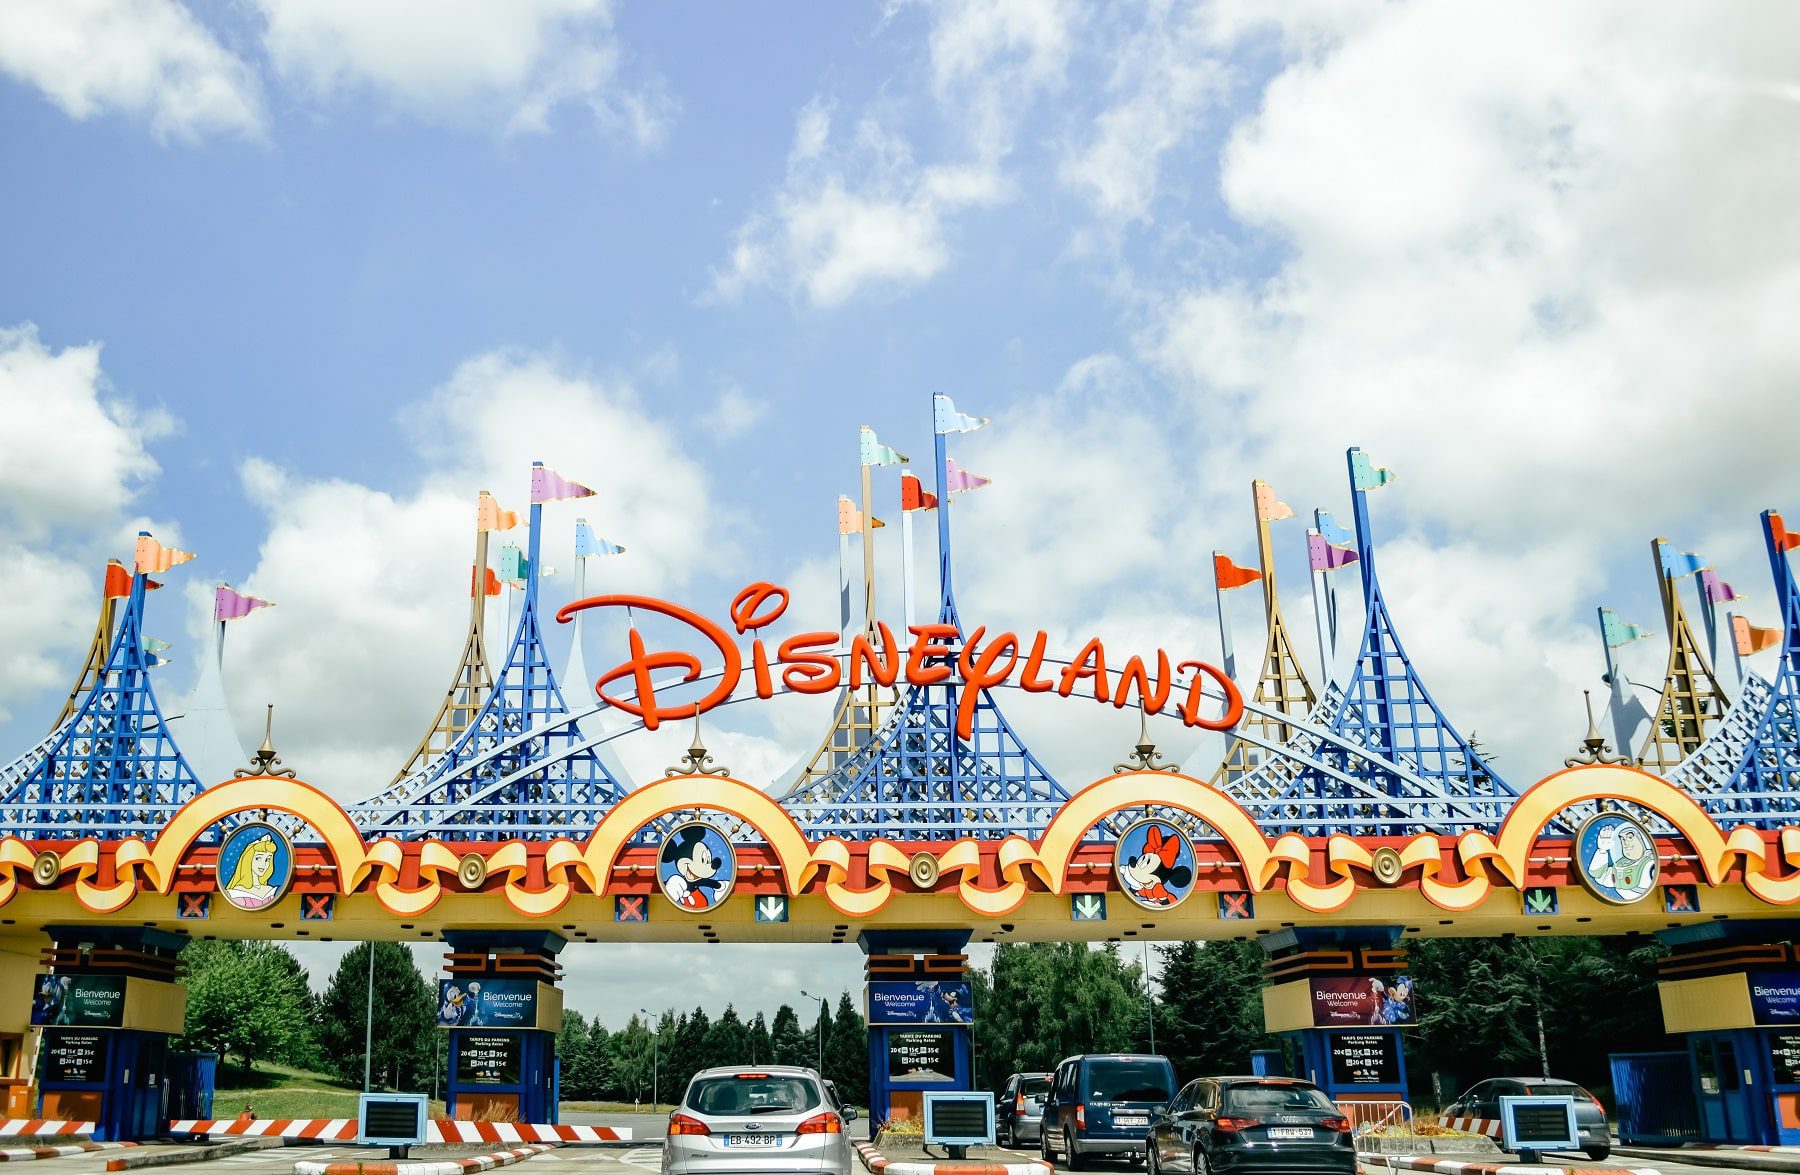 Disneyland Paris turns 30: has the theme park kept its magic?